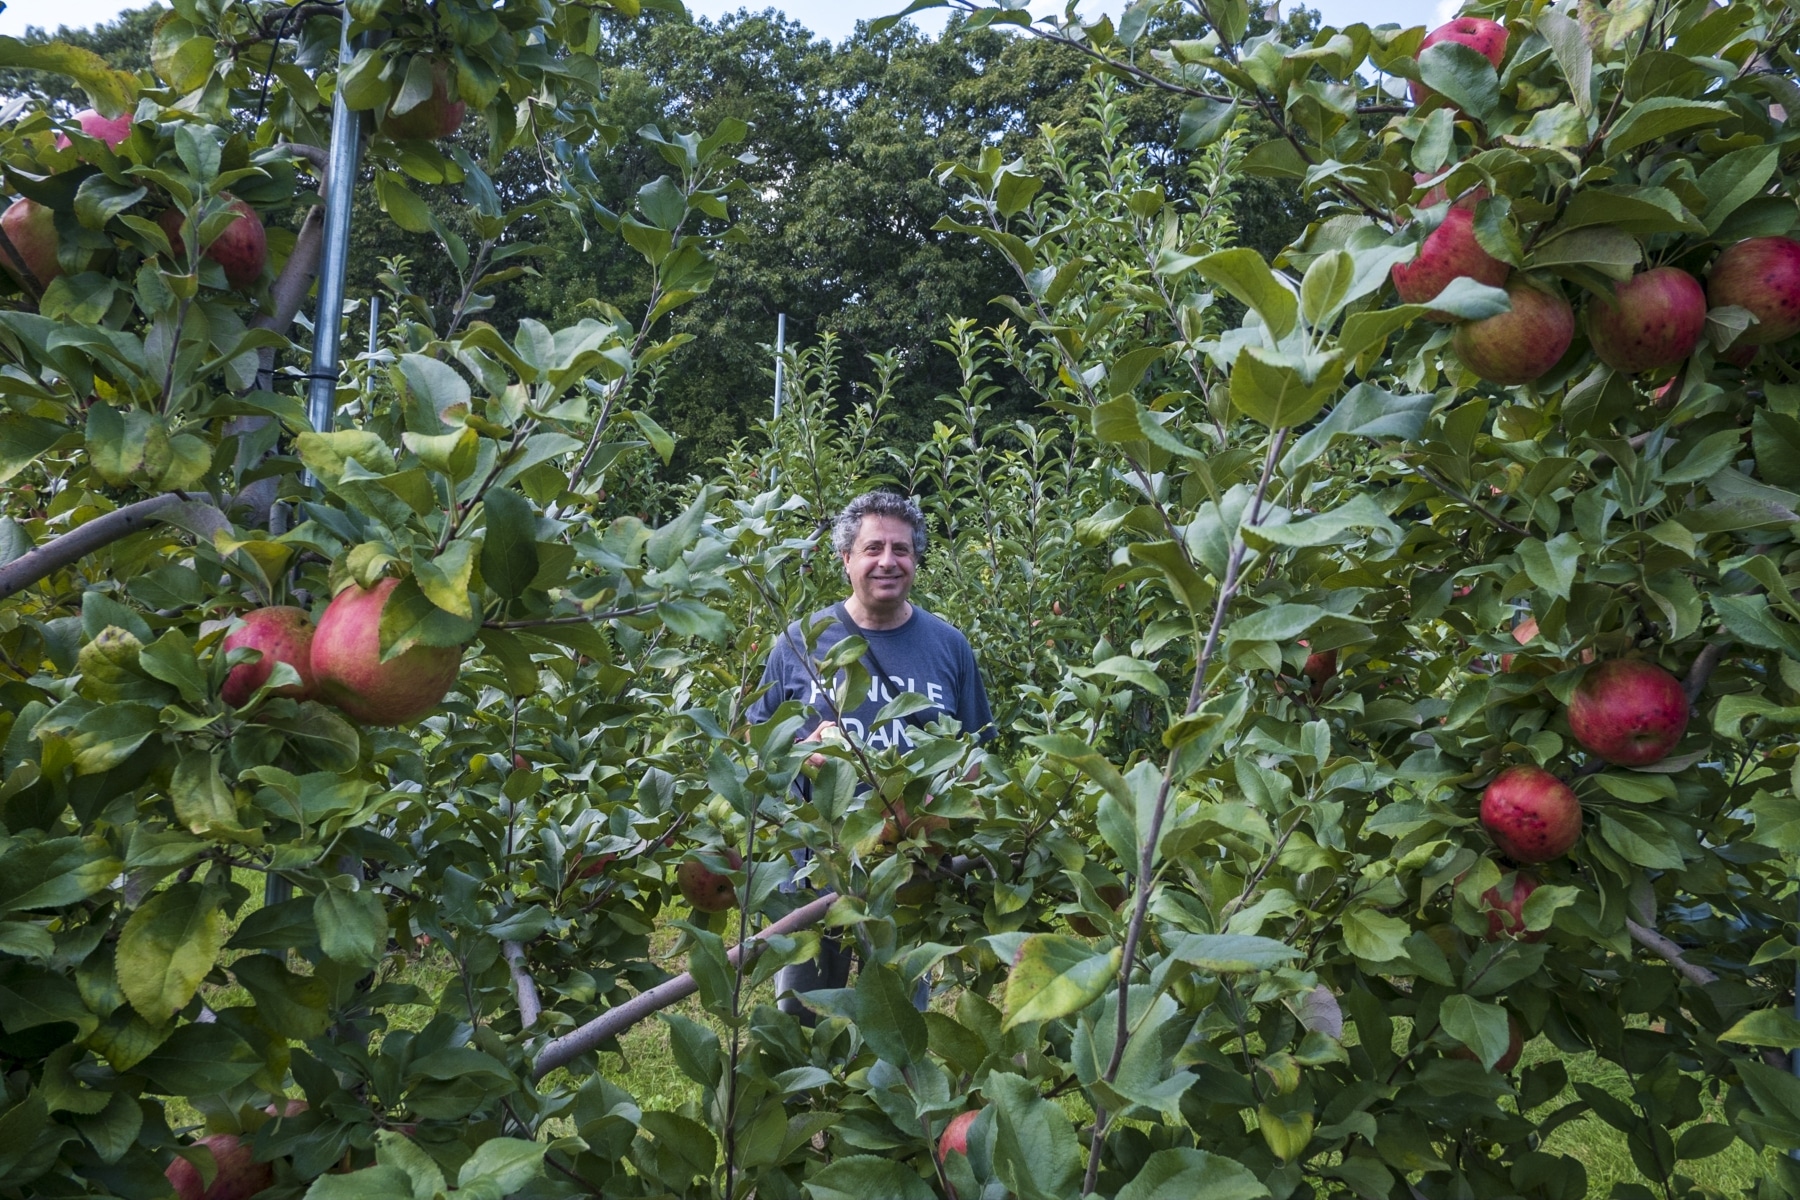 Dan in the Apple Orchard